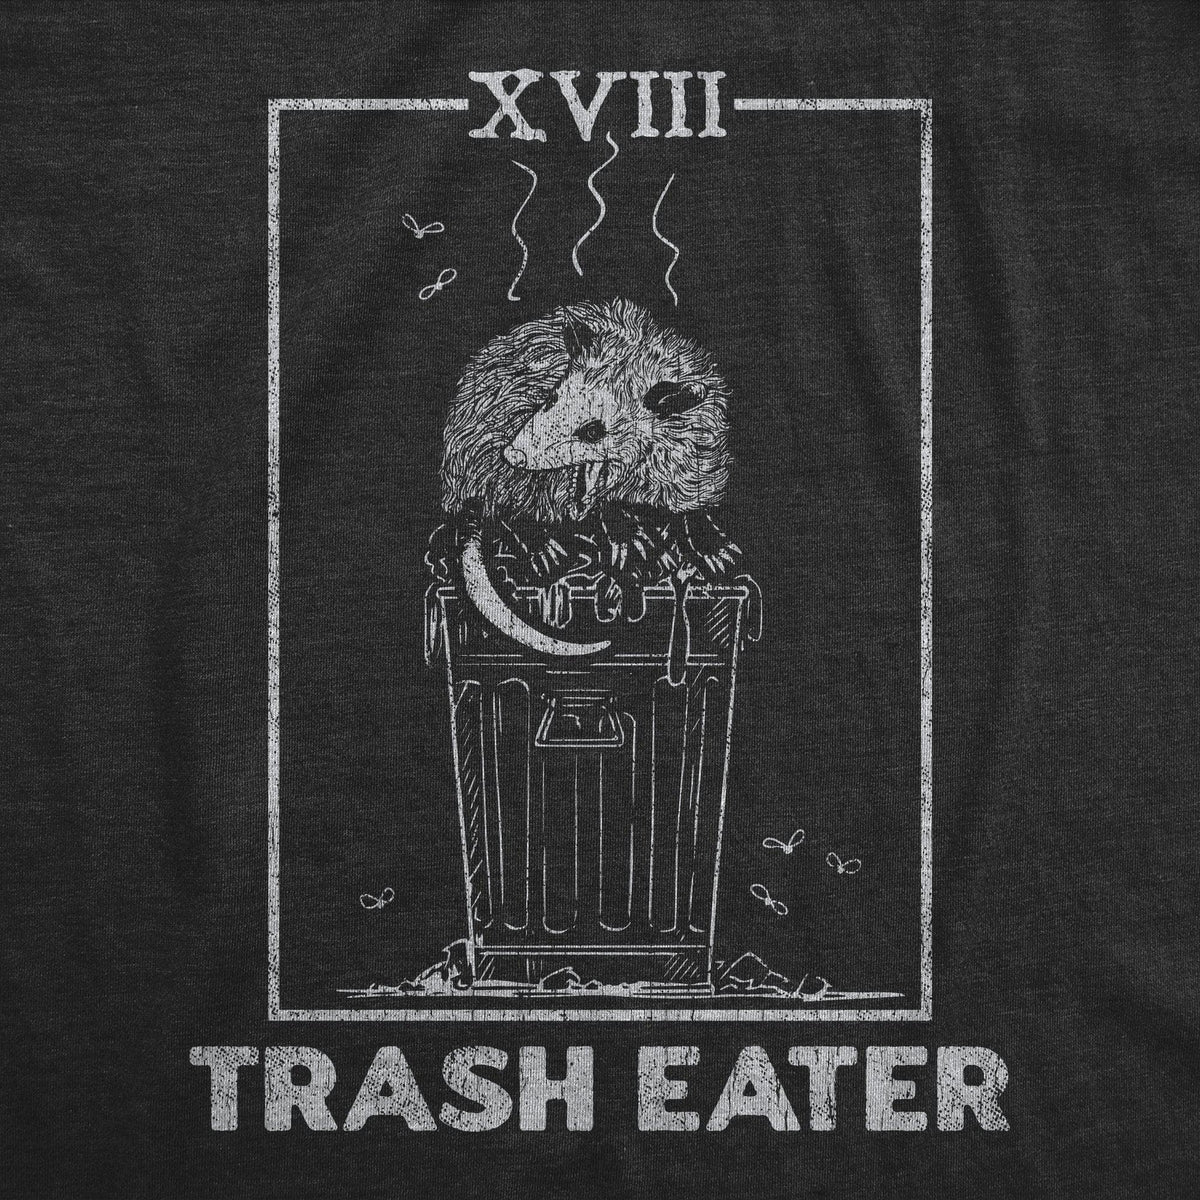 Trash Eater Men&#39;s Tshirt  -  Crazy Dog T-Shirts